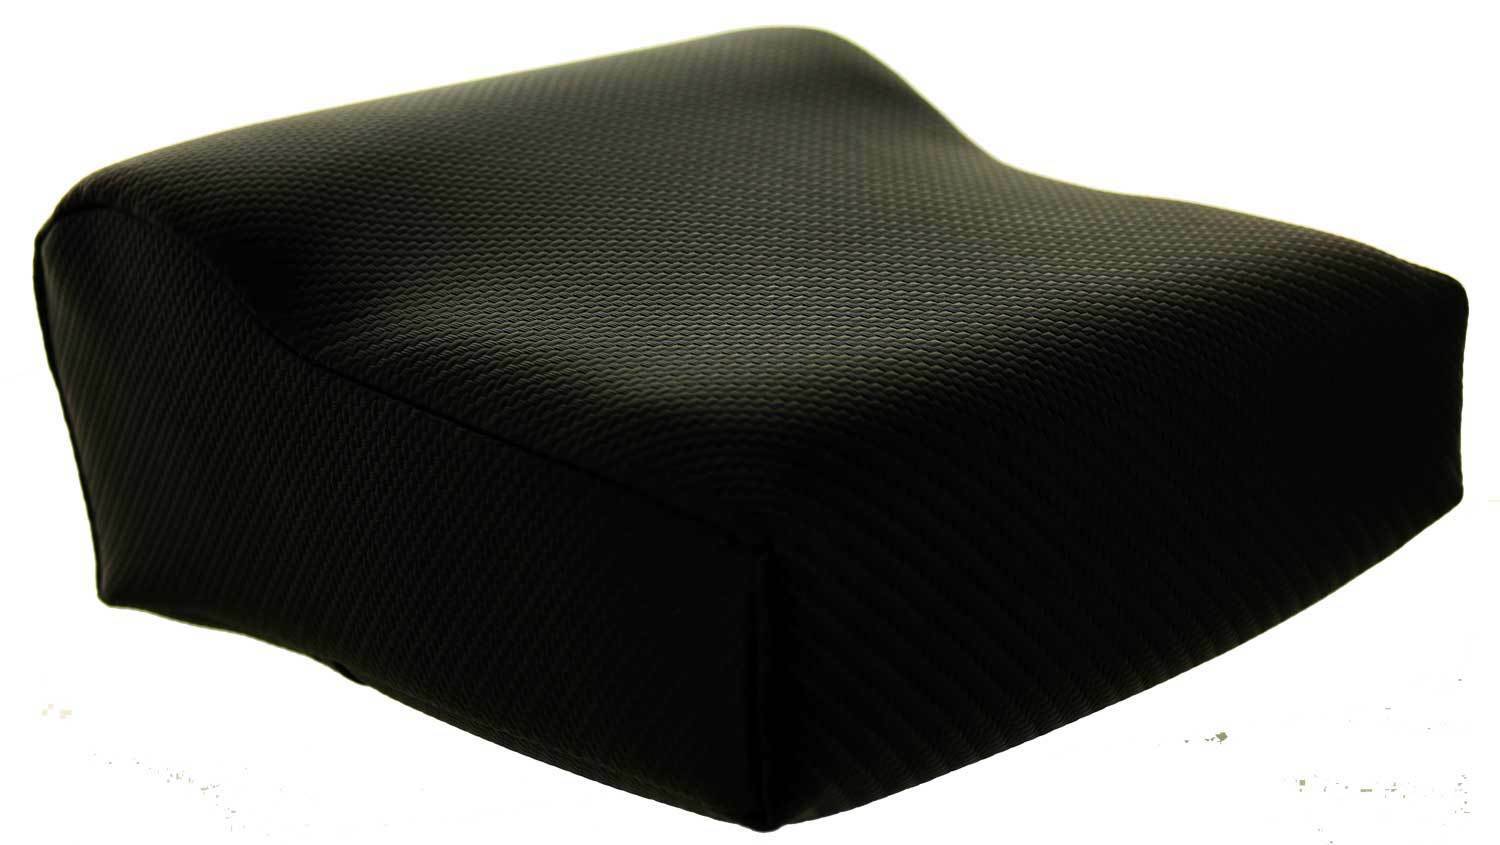 Black Contour Tanning Bed Pillow W/carbon Fiber Look. Compact Comfortable Size